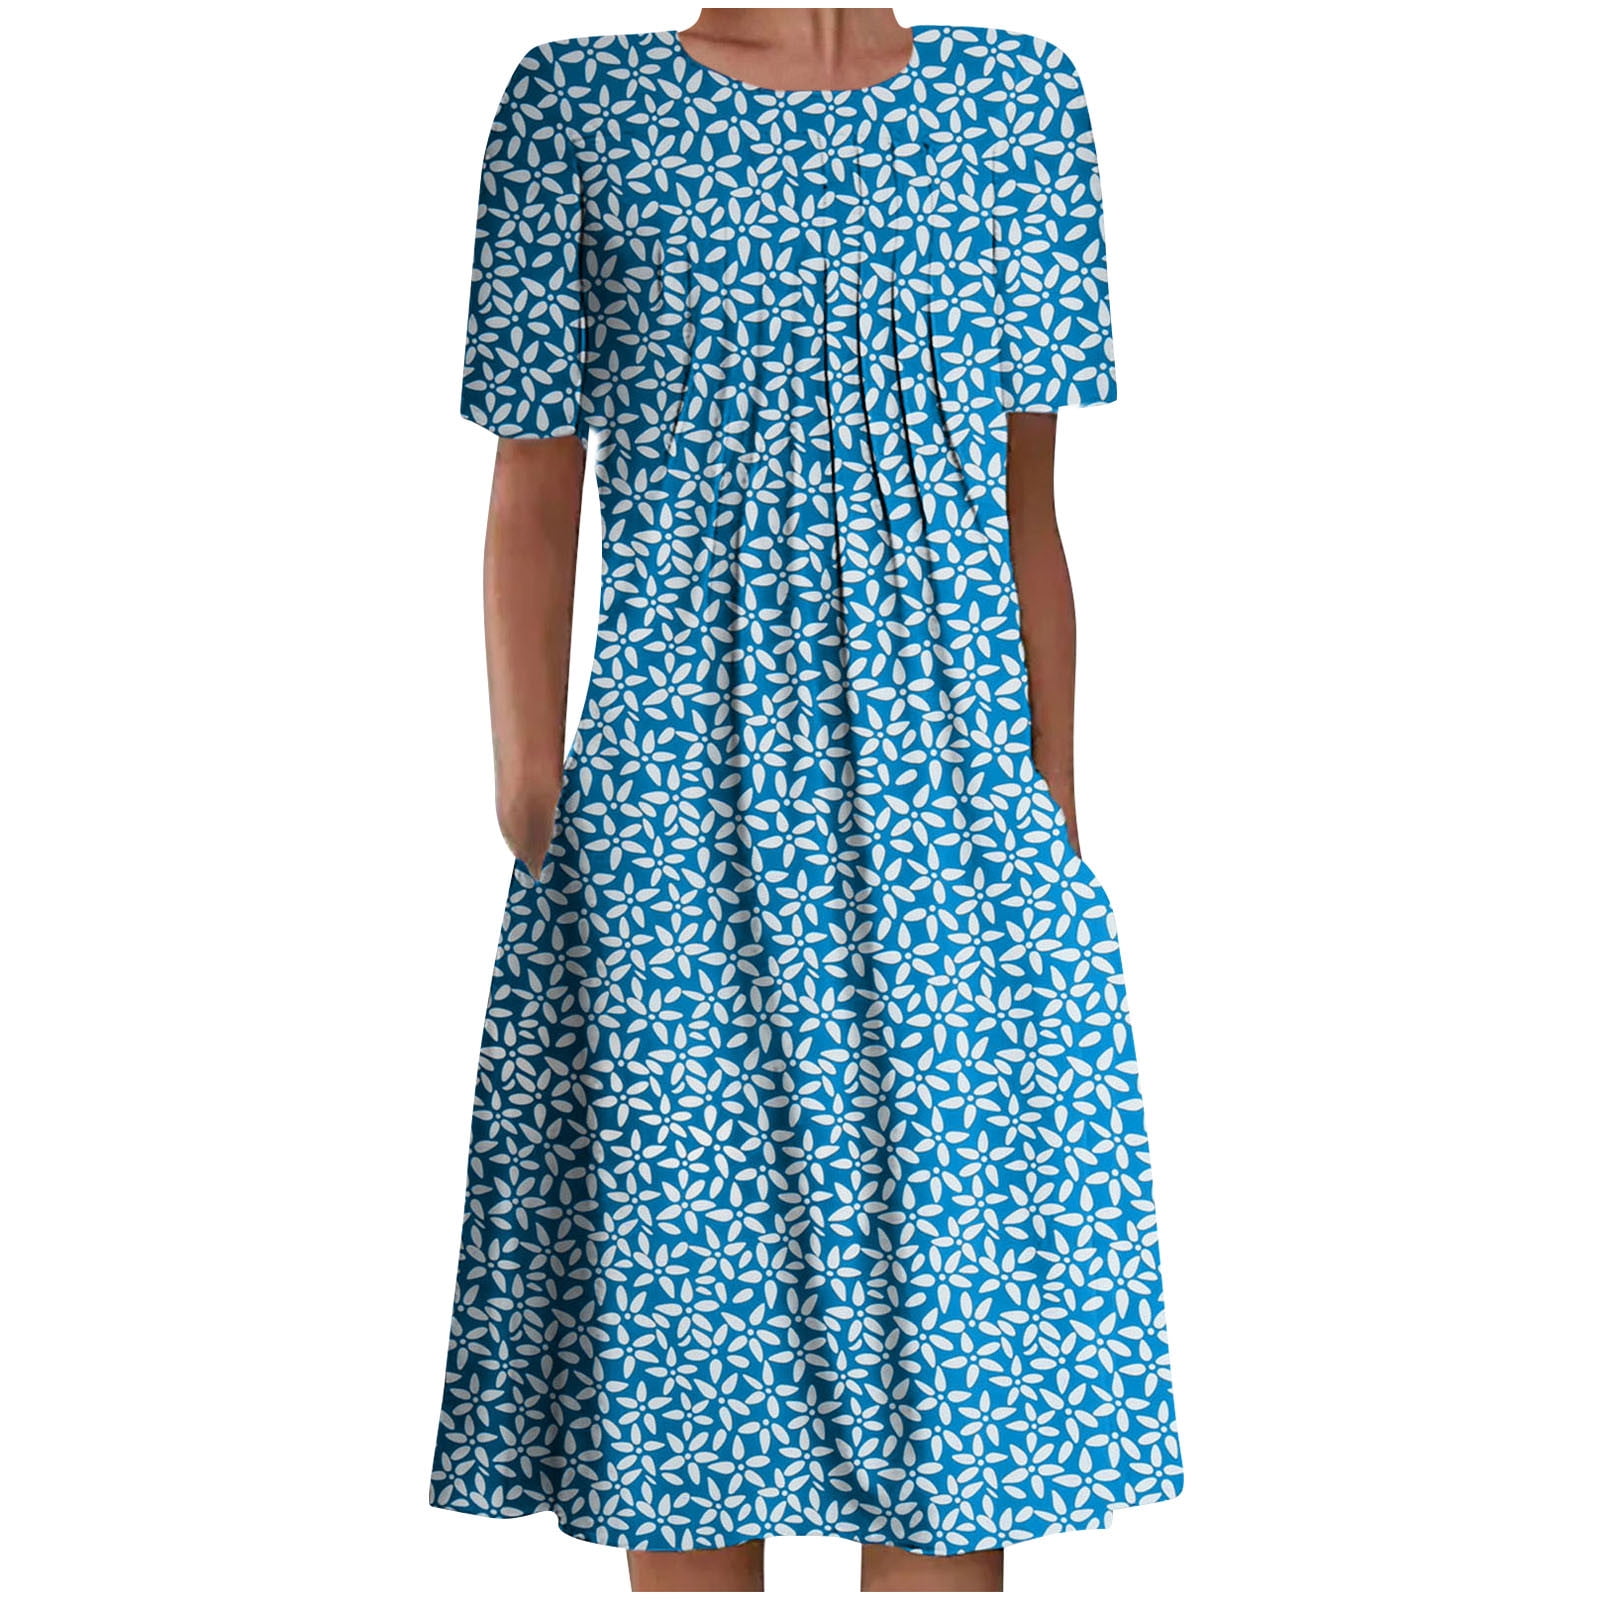 RYRJJ Boho Floral Printed Casual Dress for Women Summer Crewneck Short ...